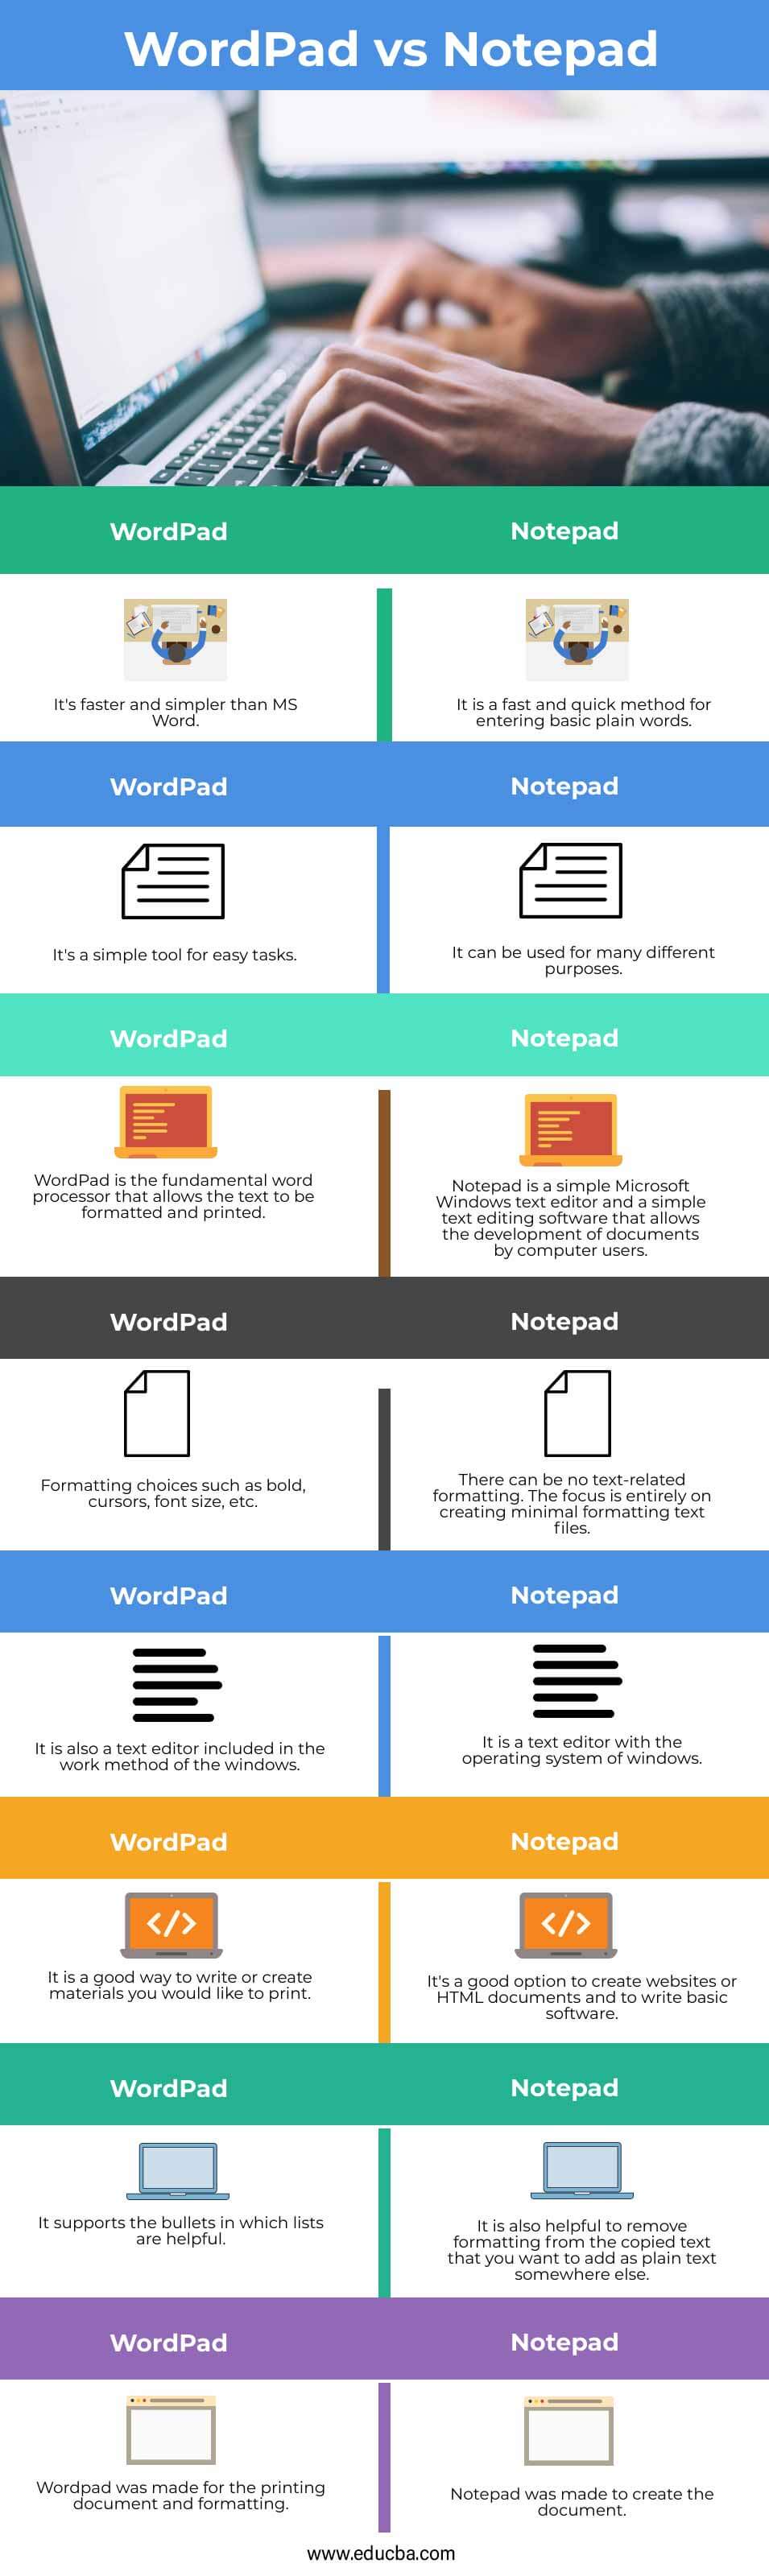 WordPad-vs-Notepad-info